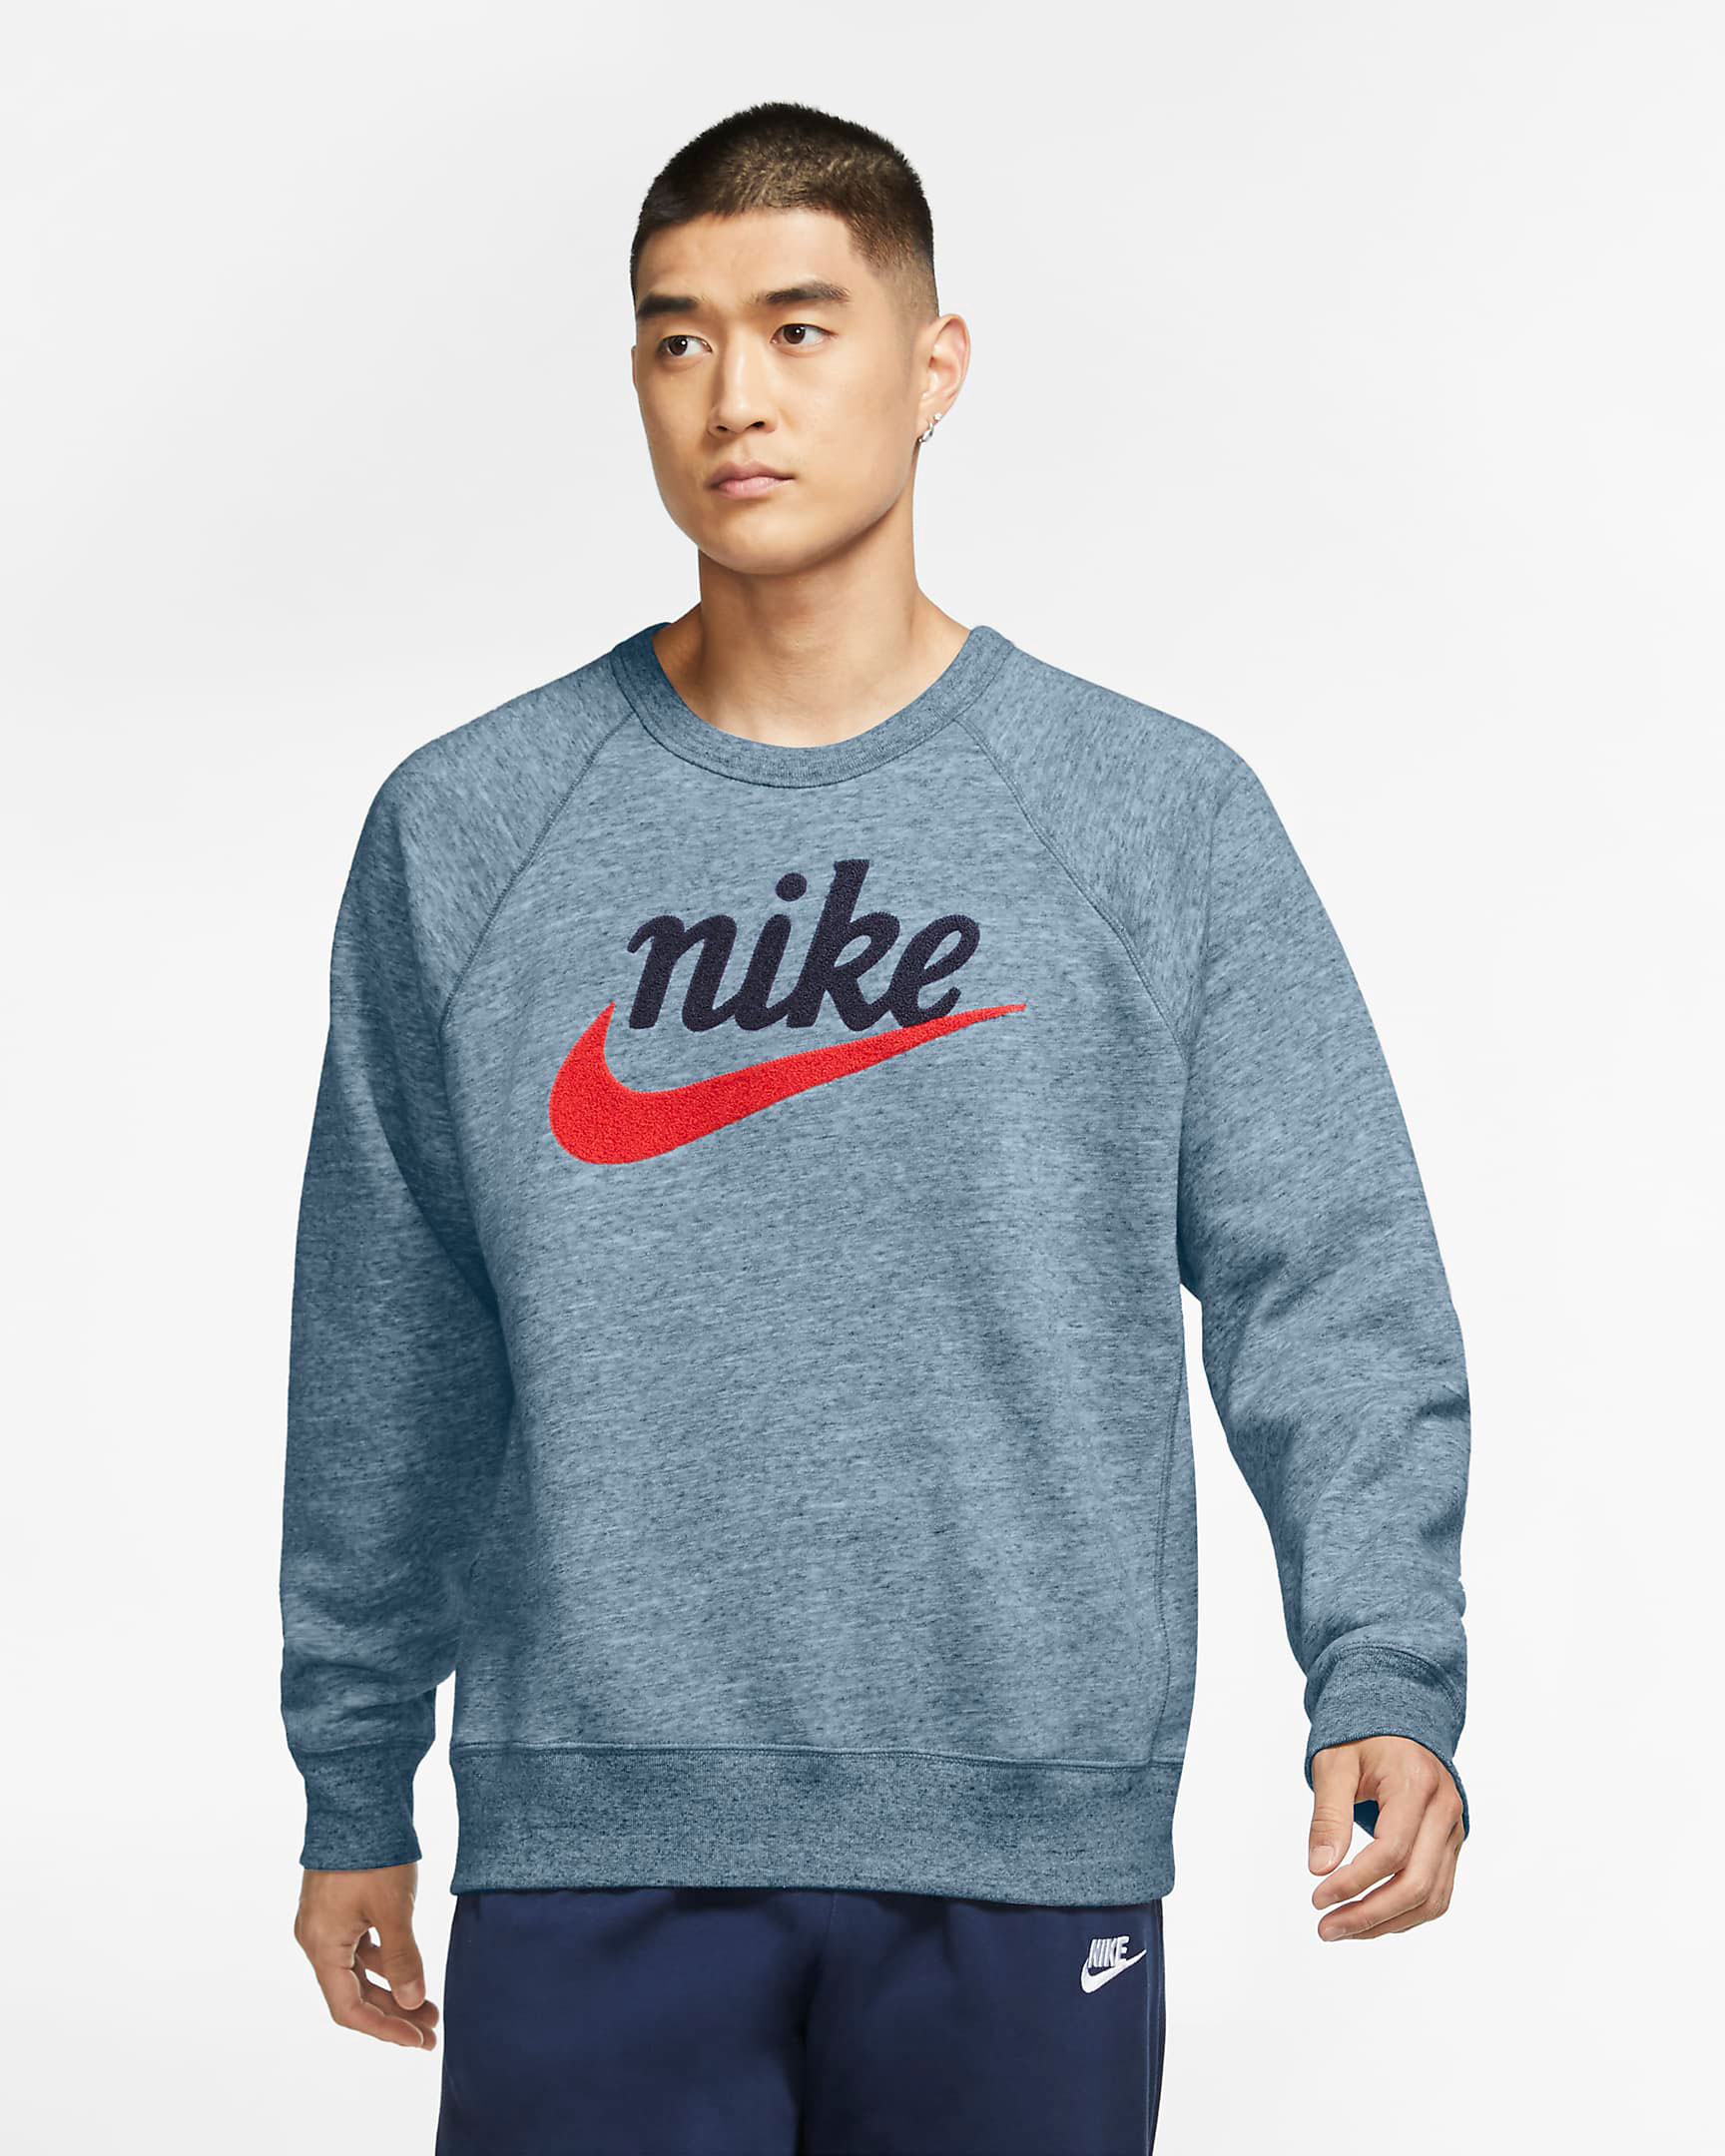 Nike Kobe AD NXT Blue Hero Clothing Match | SneakerFits.com